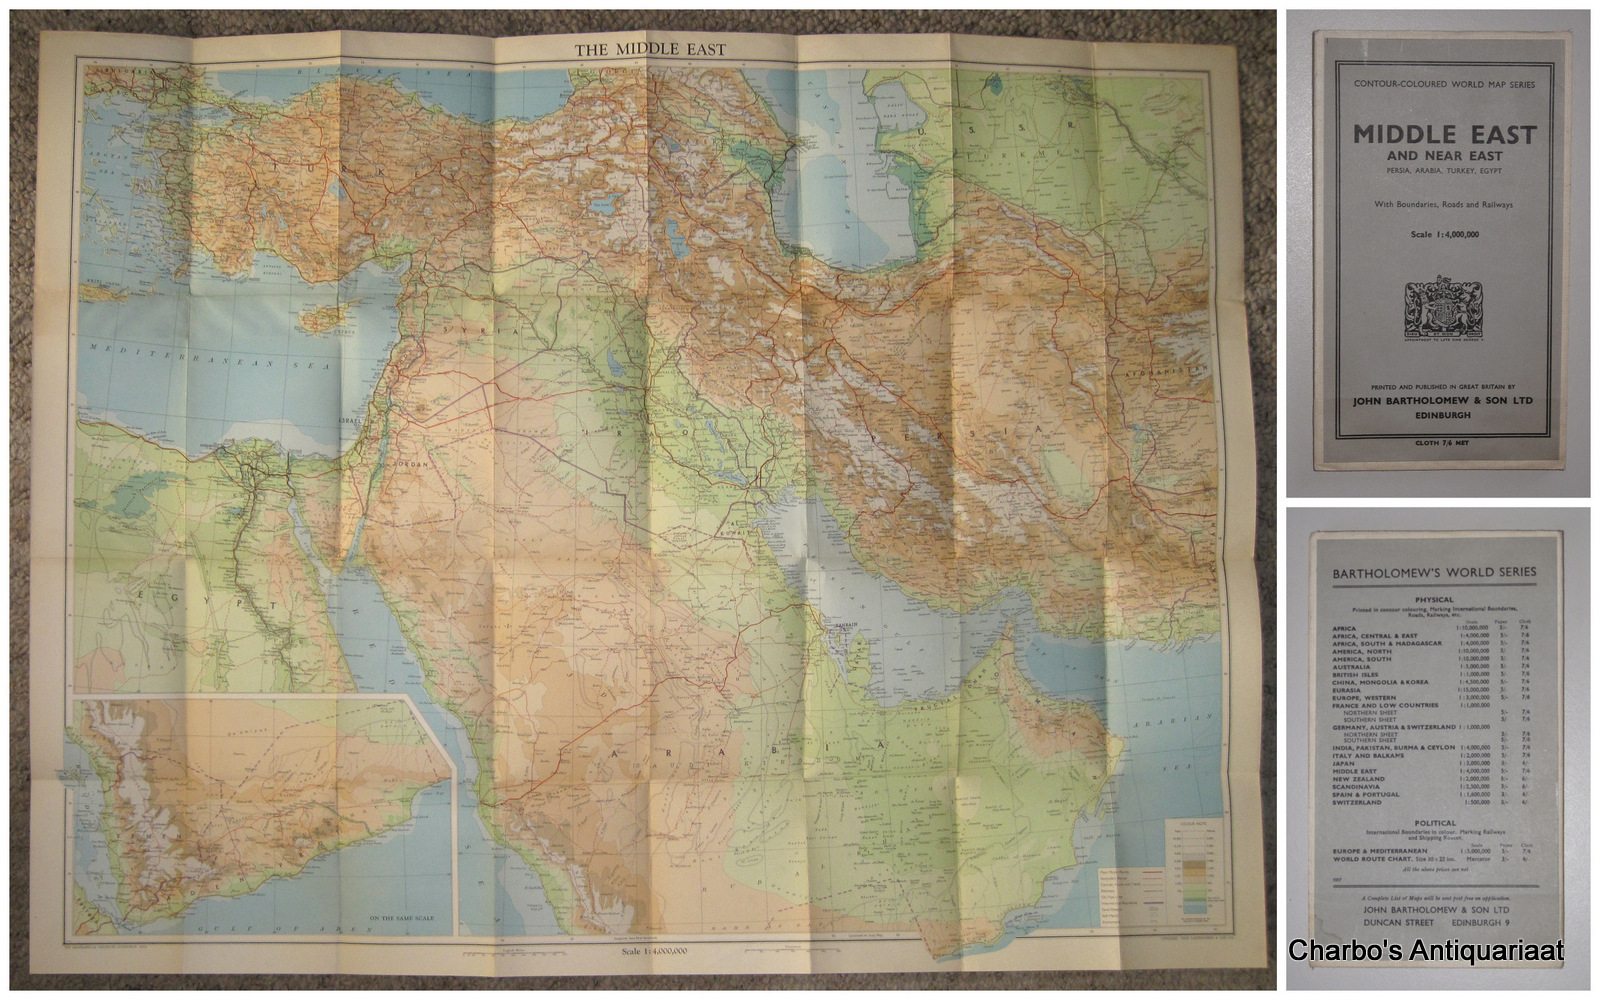 BARTHOLOMEW, -  Middle East and Near East: Persia, Arabia, Turkey, Egypt. With boundaries, roads and railways. Scale 1:4,000,000.